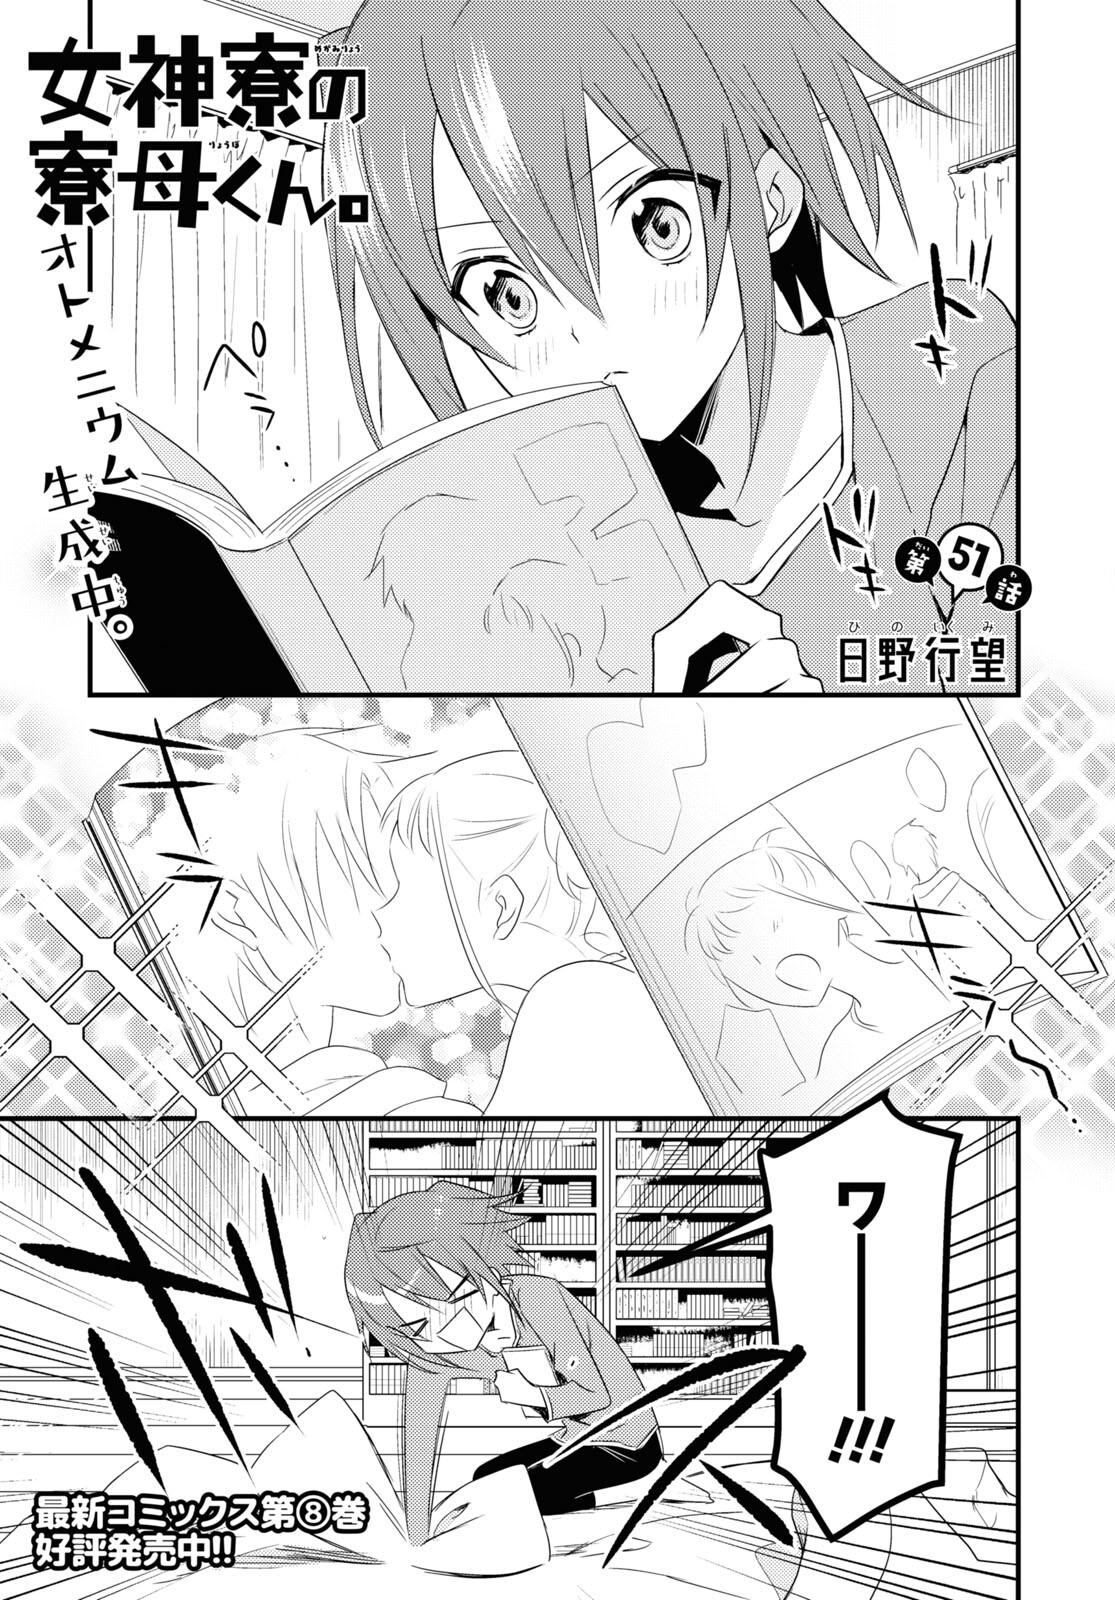 Megami-ryou no Ryoubo-kun - Chapter 51 - Page 1